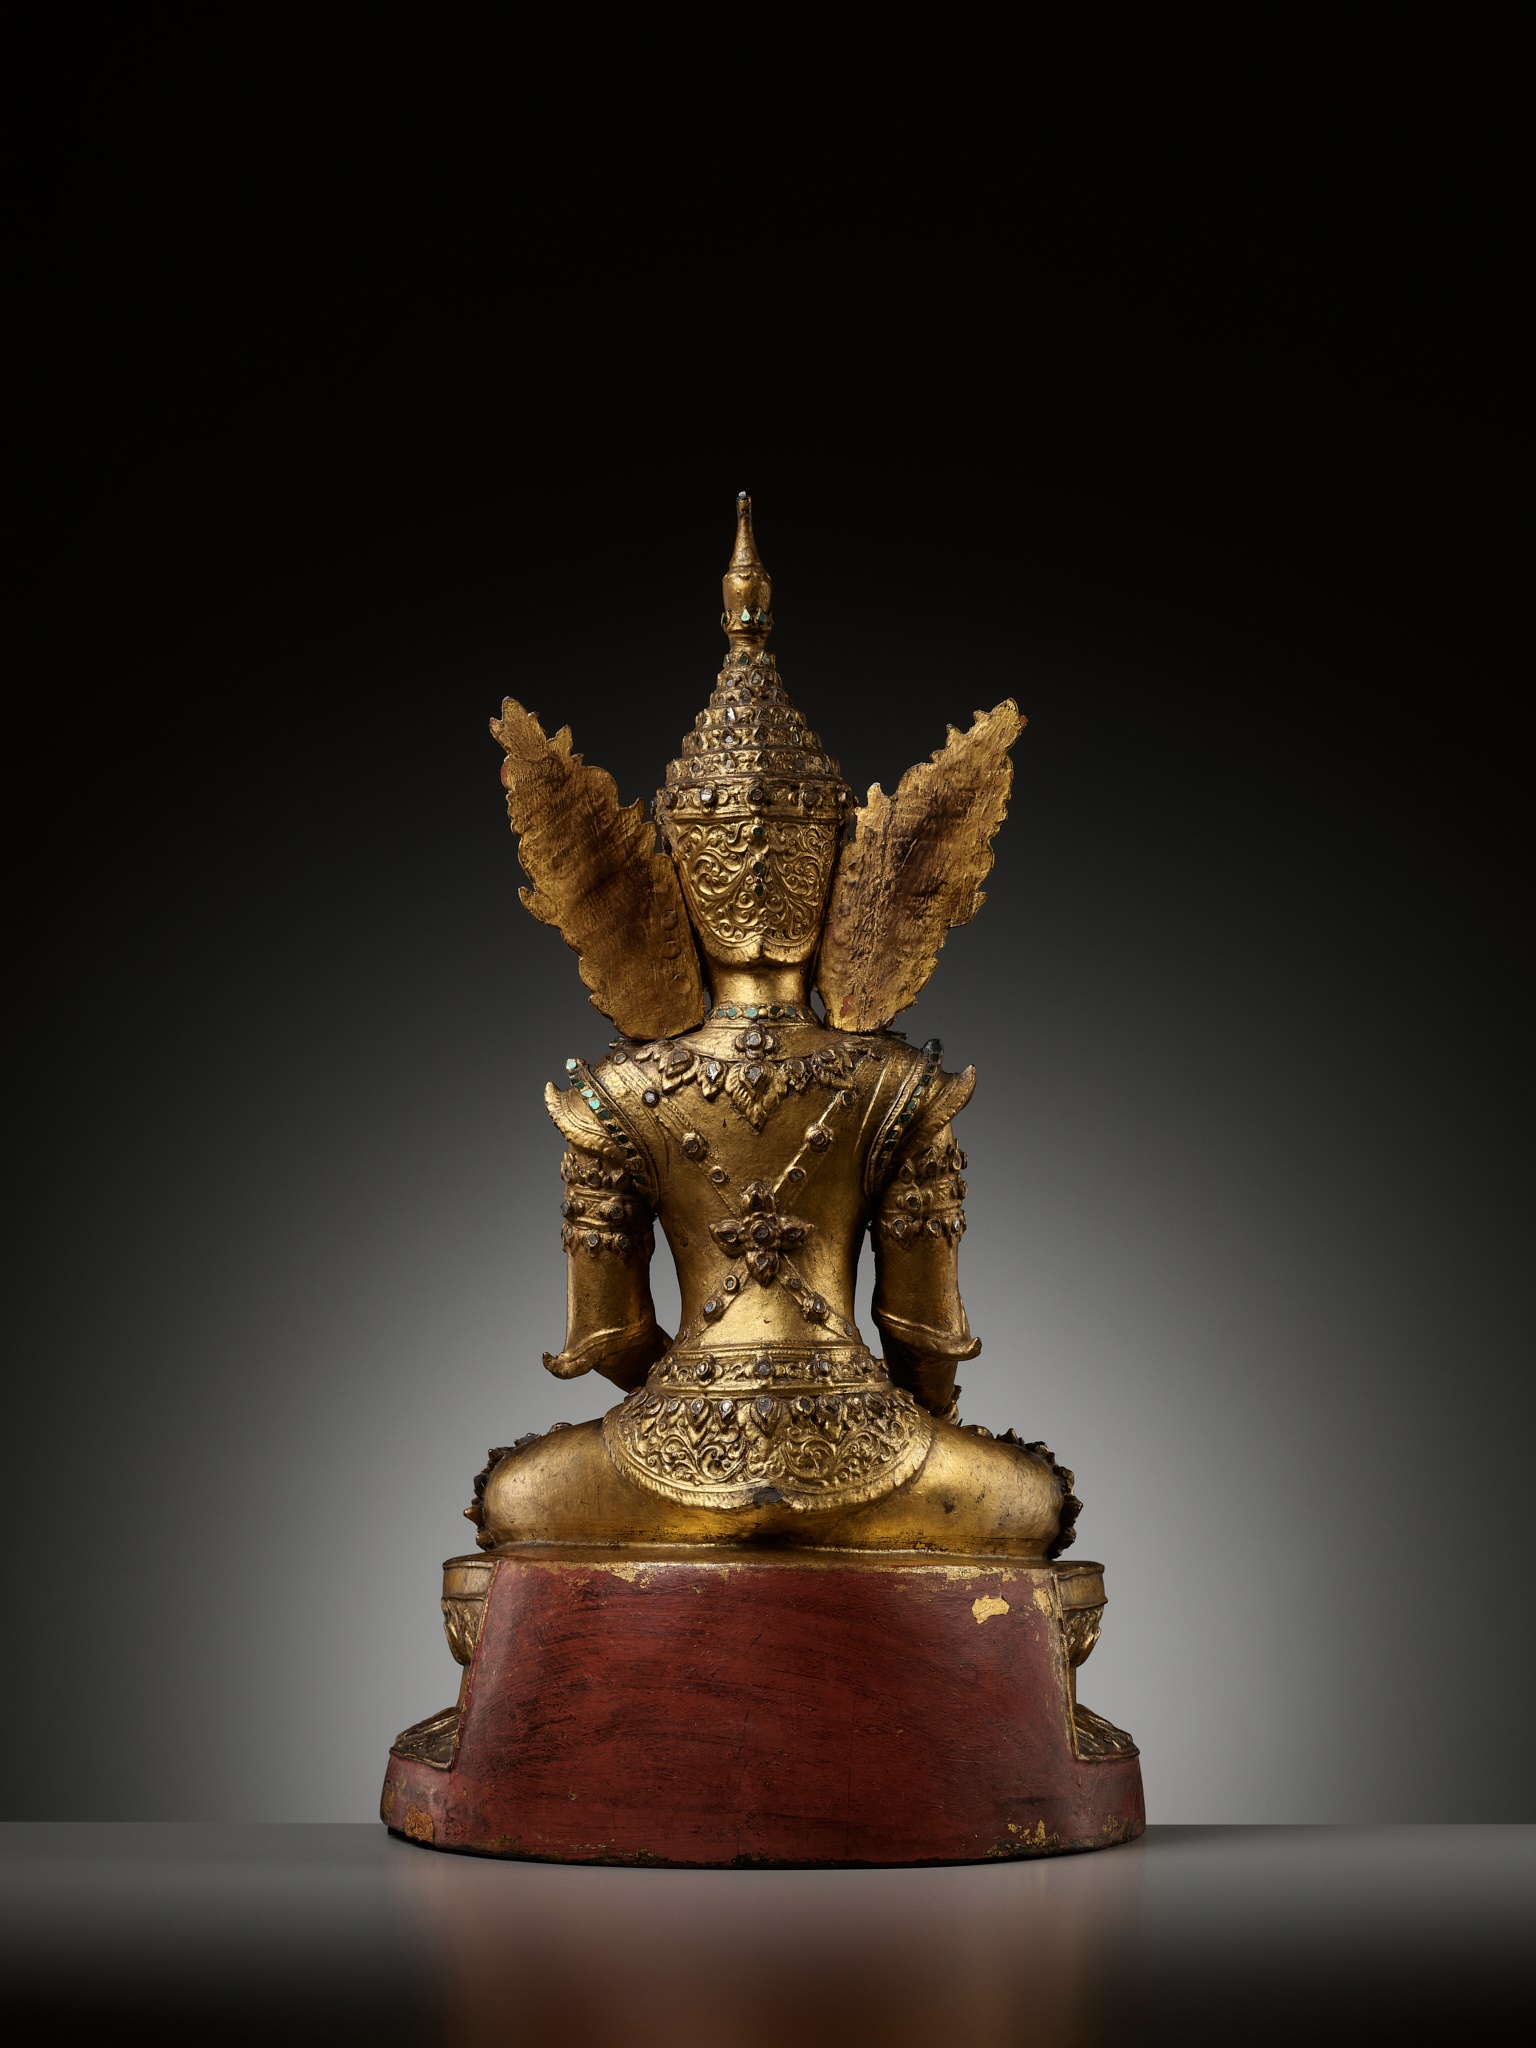 A GILT-LACQUERED WOOD FIGURE OF BUDDHA SHAKYAMUNI, SHAN STATE, BURMA,LATE 18TH TO EARLY 19TH CENTURY - Image 7 of 9